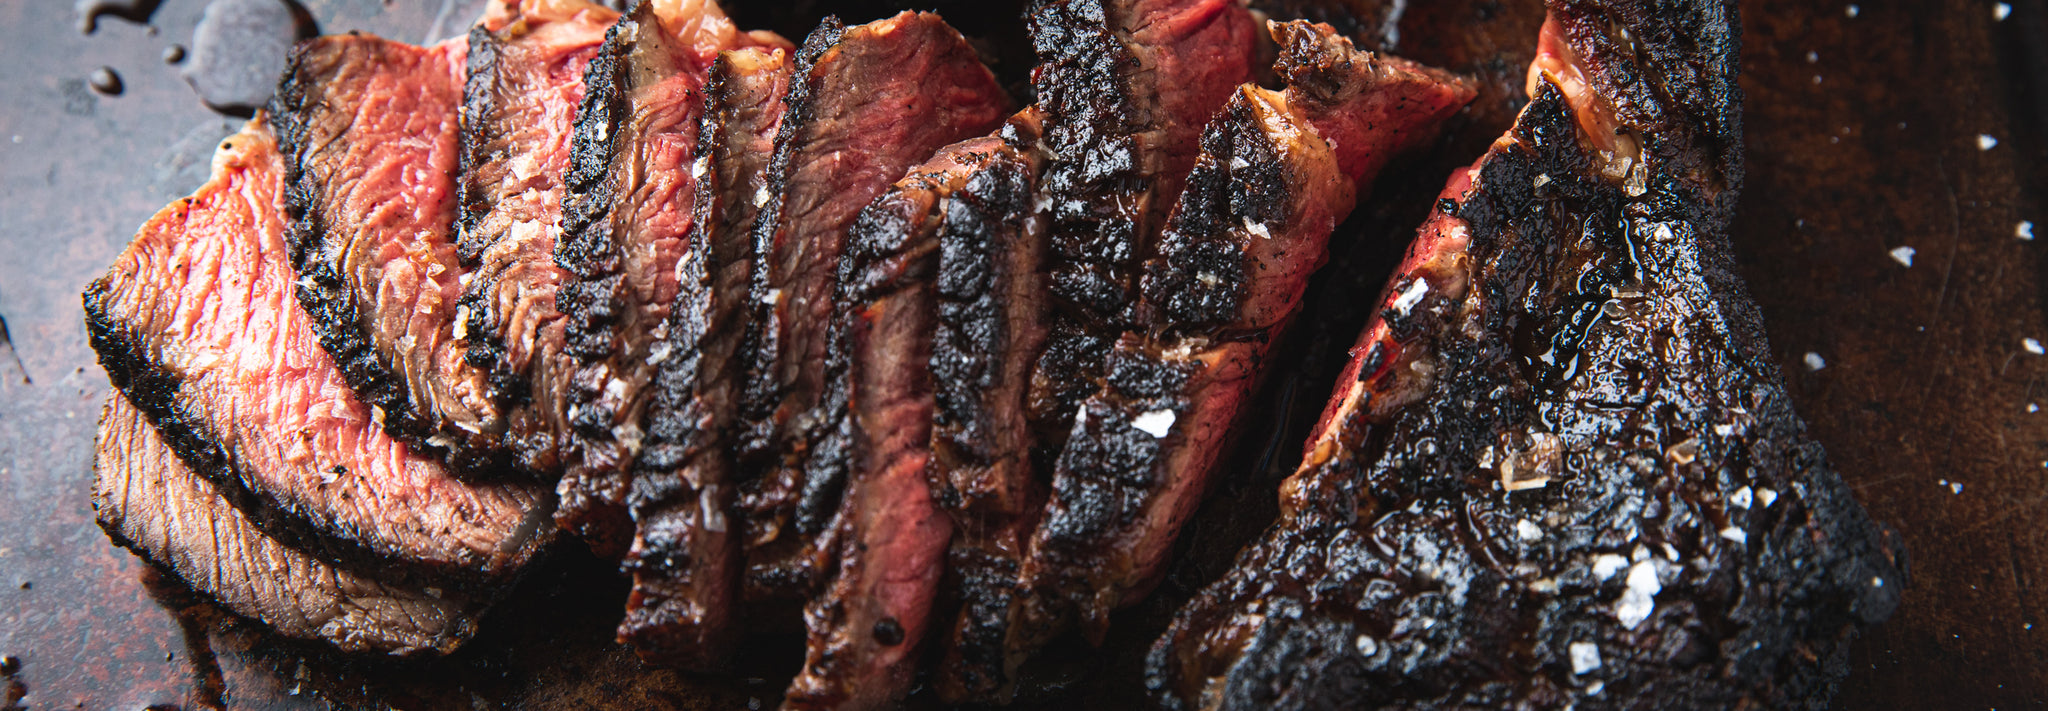 Texan Dalmatian Rubbed Steak - Dome - Gozney